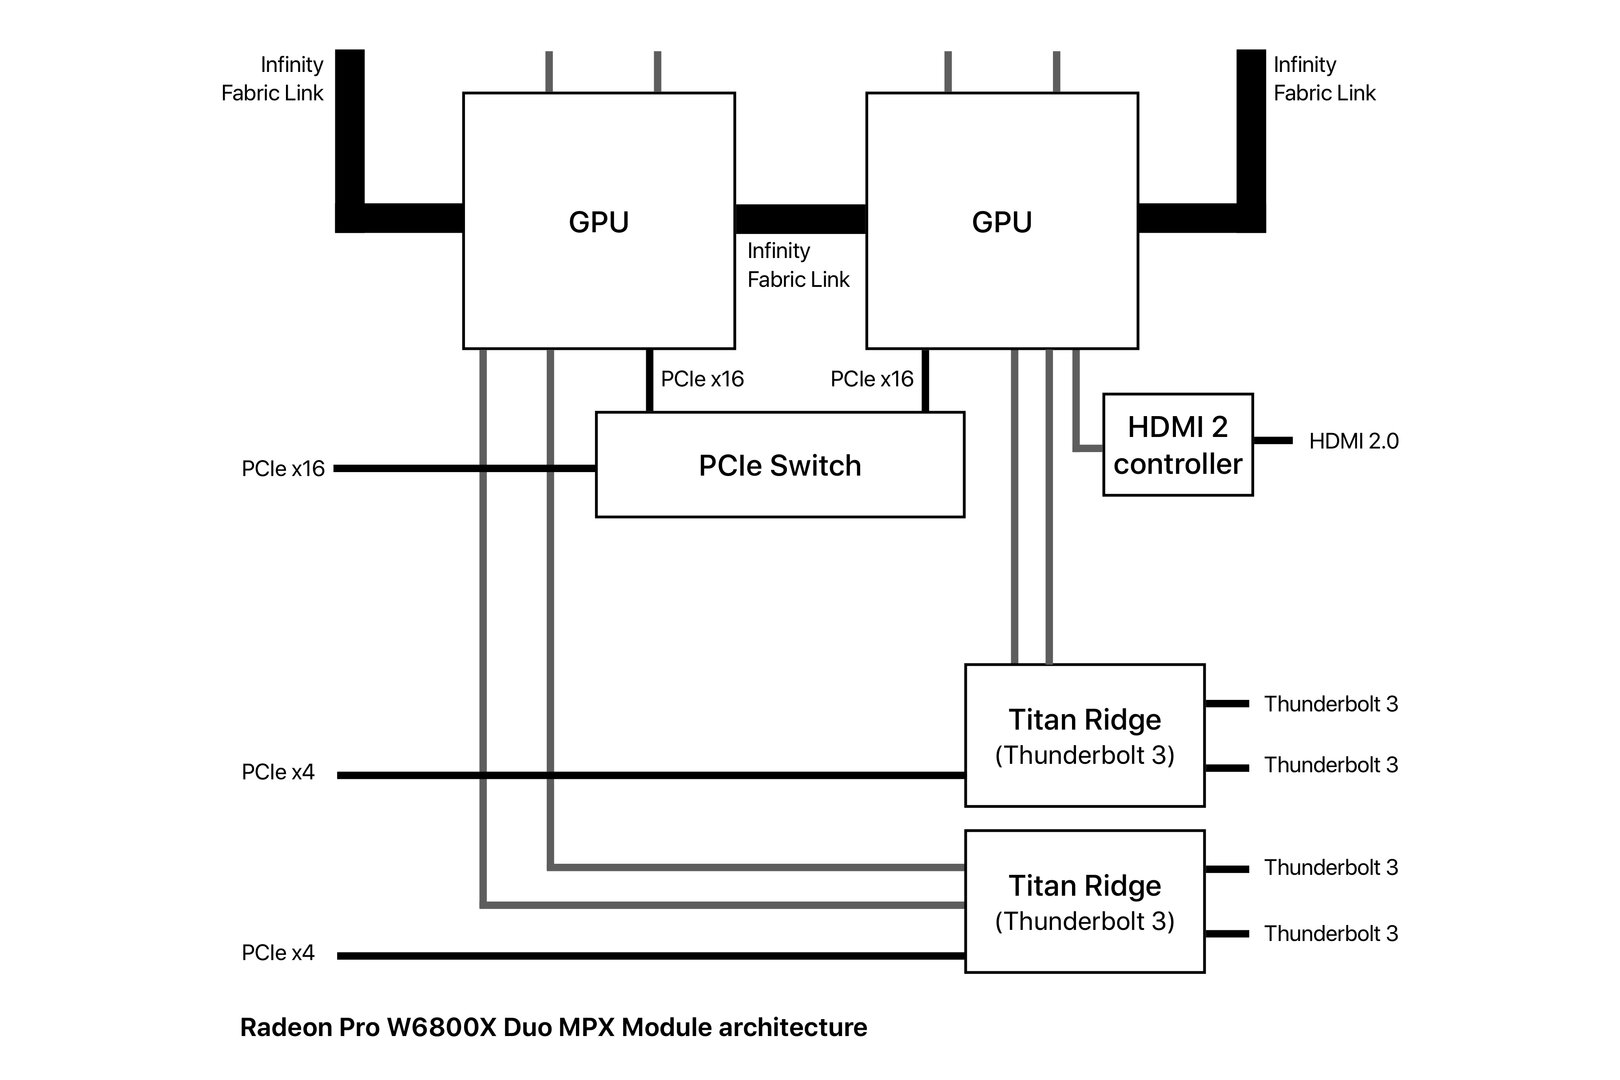 Radeon Pro W6800X Duo architecture